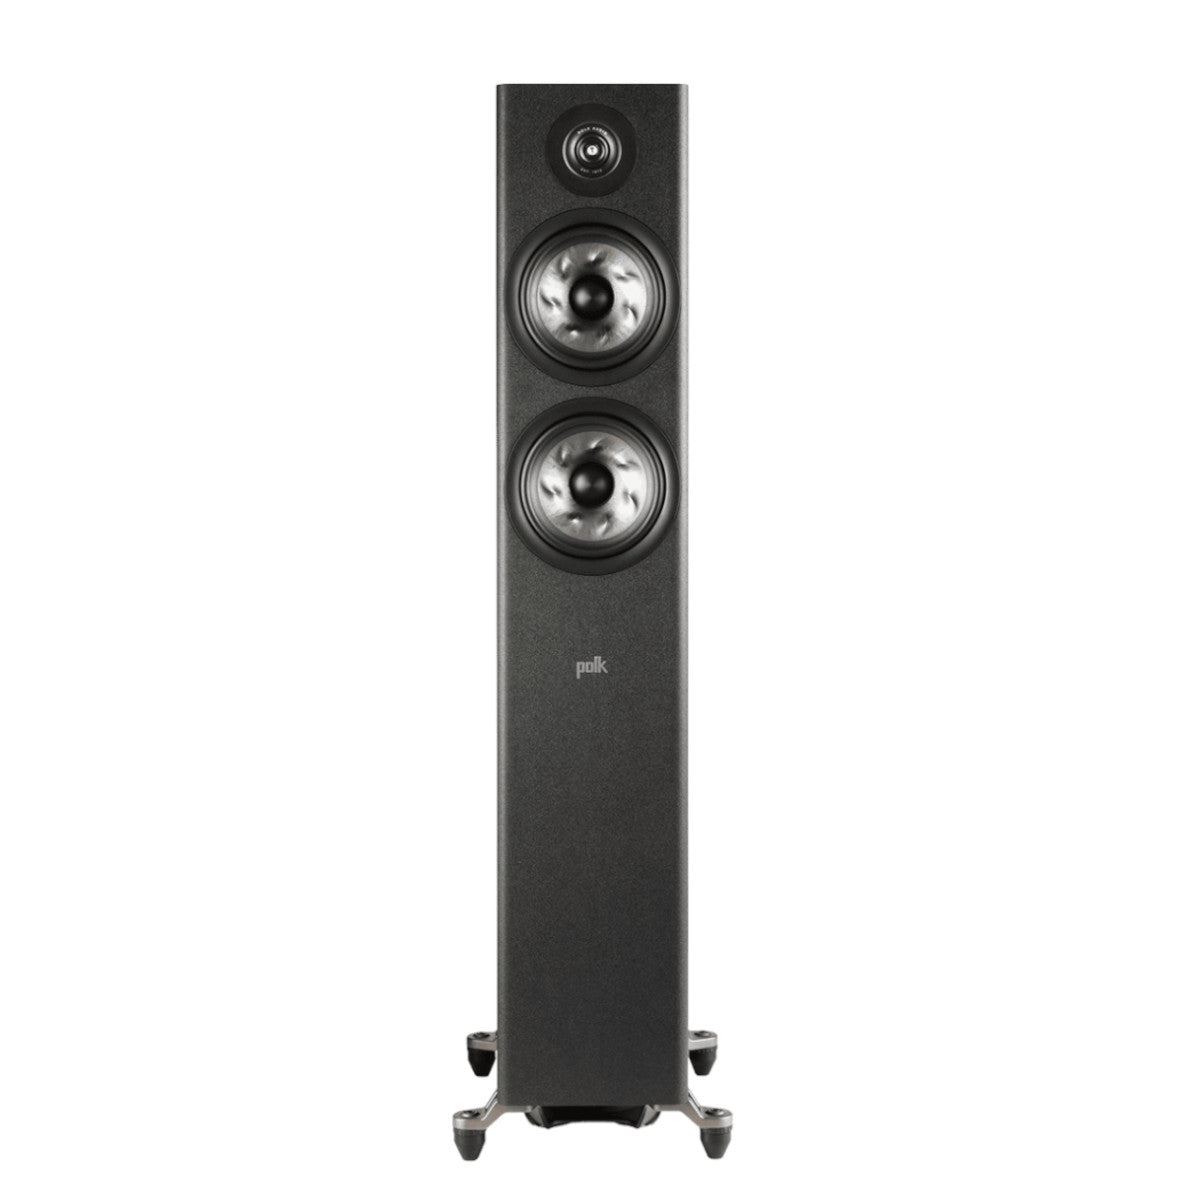 Buy Polk-Audio MXT60 floorstanding speakers Online in India at Lowest Price